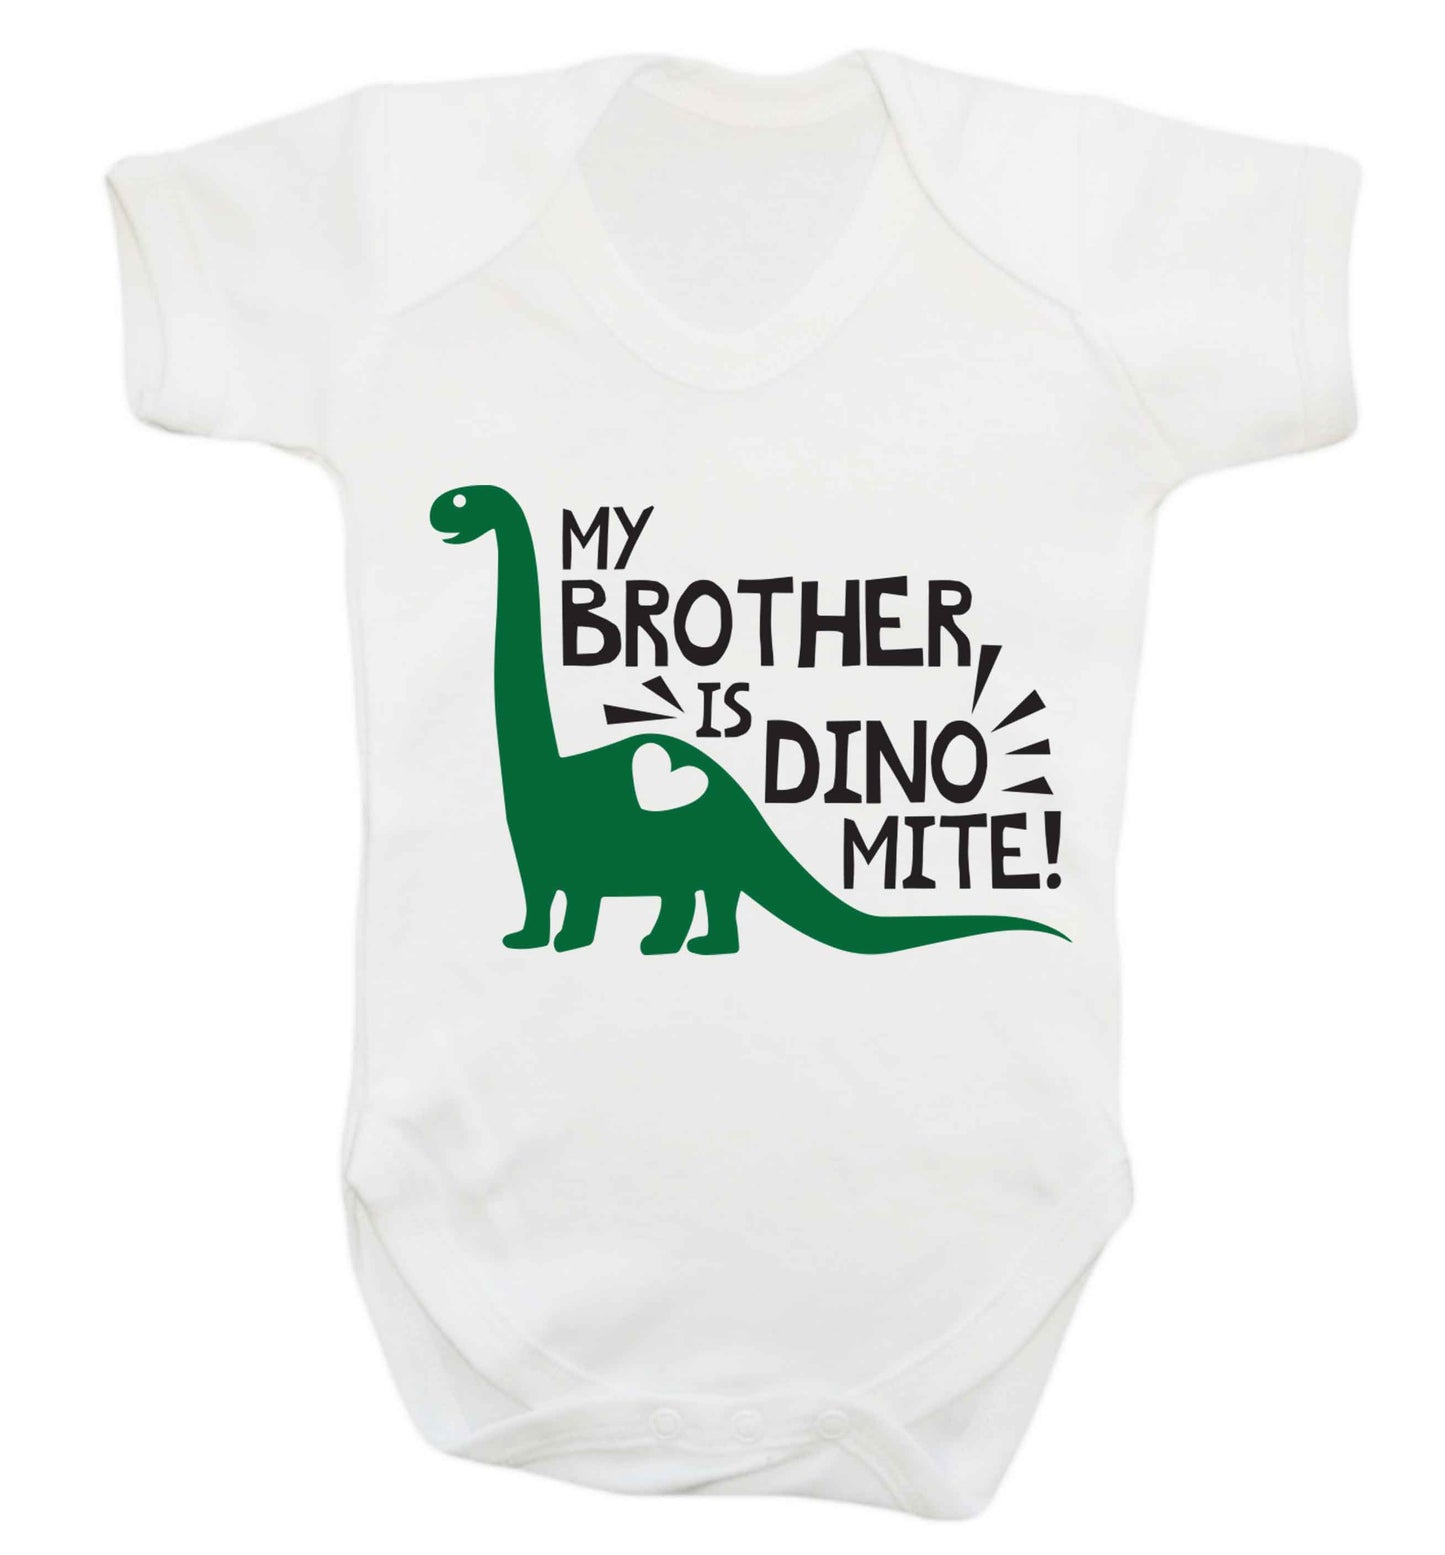 My brother is dinomite! Baby Vest white 18-24 months